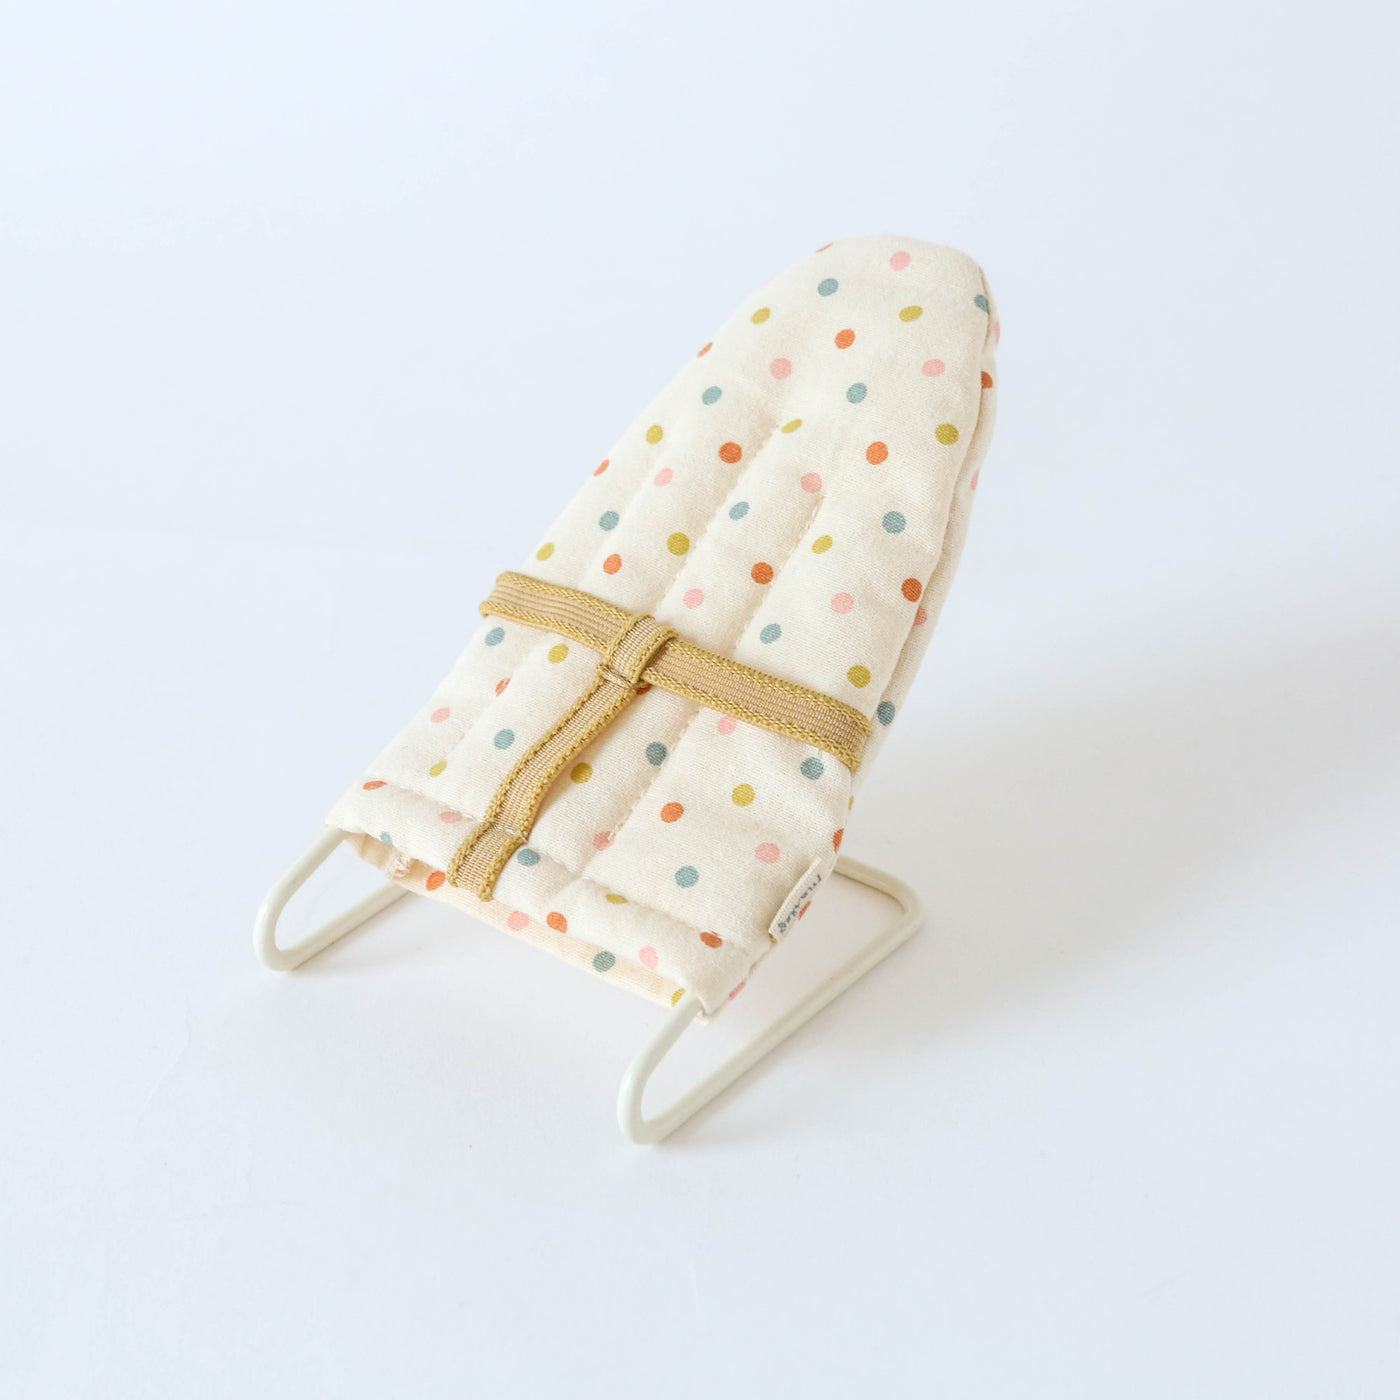 Micro 'Babysitter' Baby Chair by Maileg